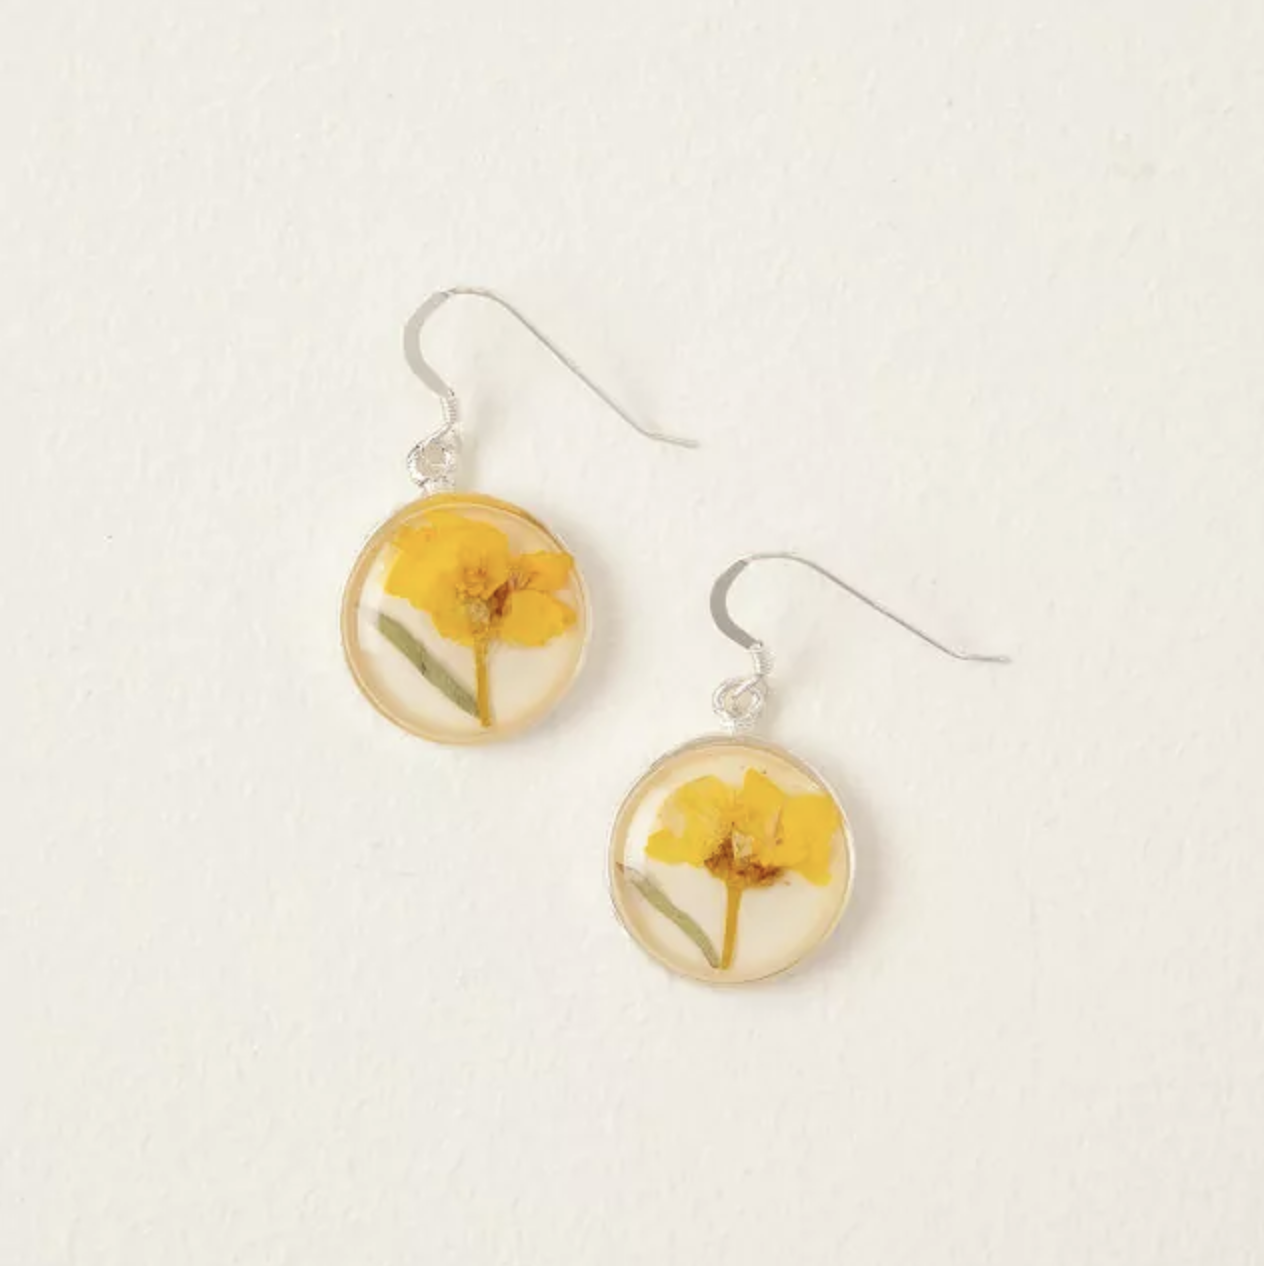 Birth Flower Earrings: November - Chrysanthemum